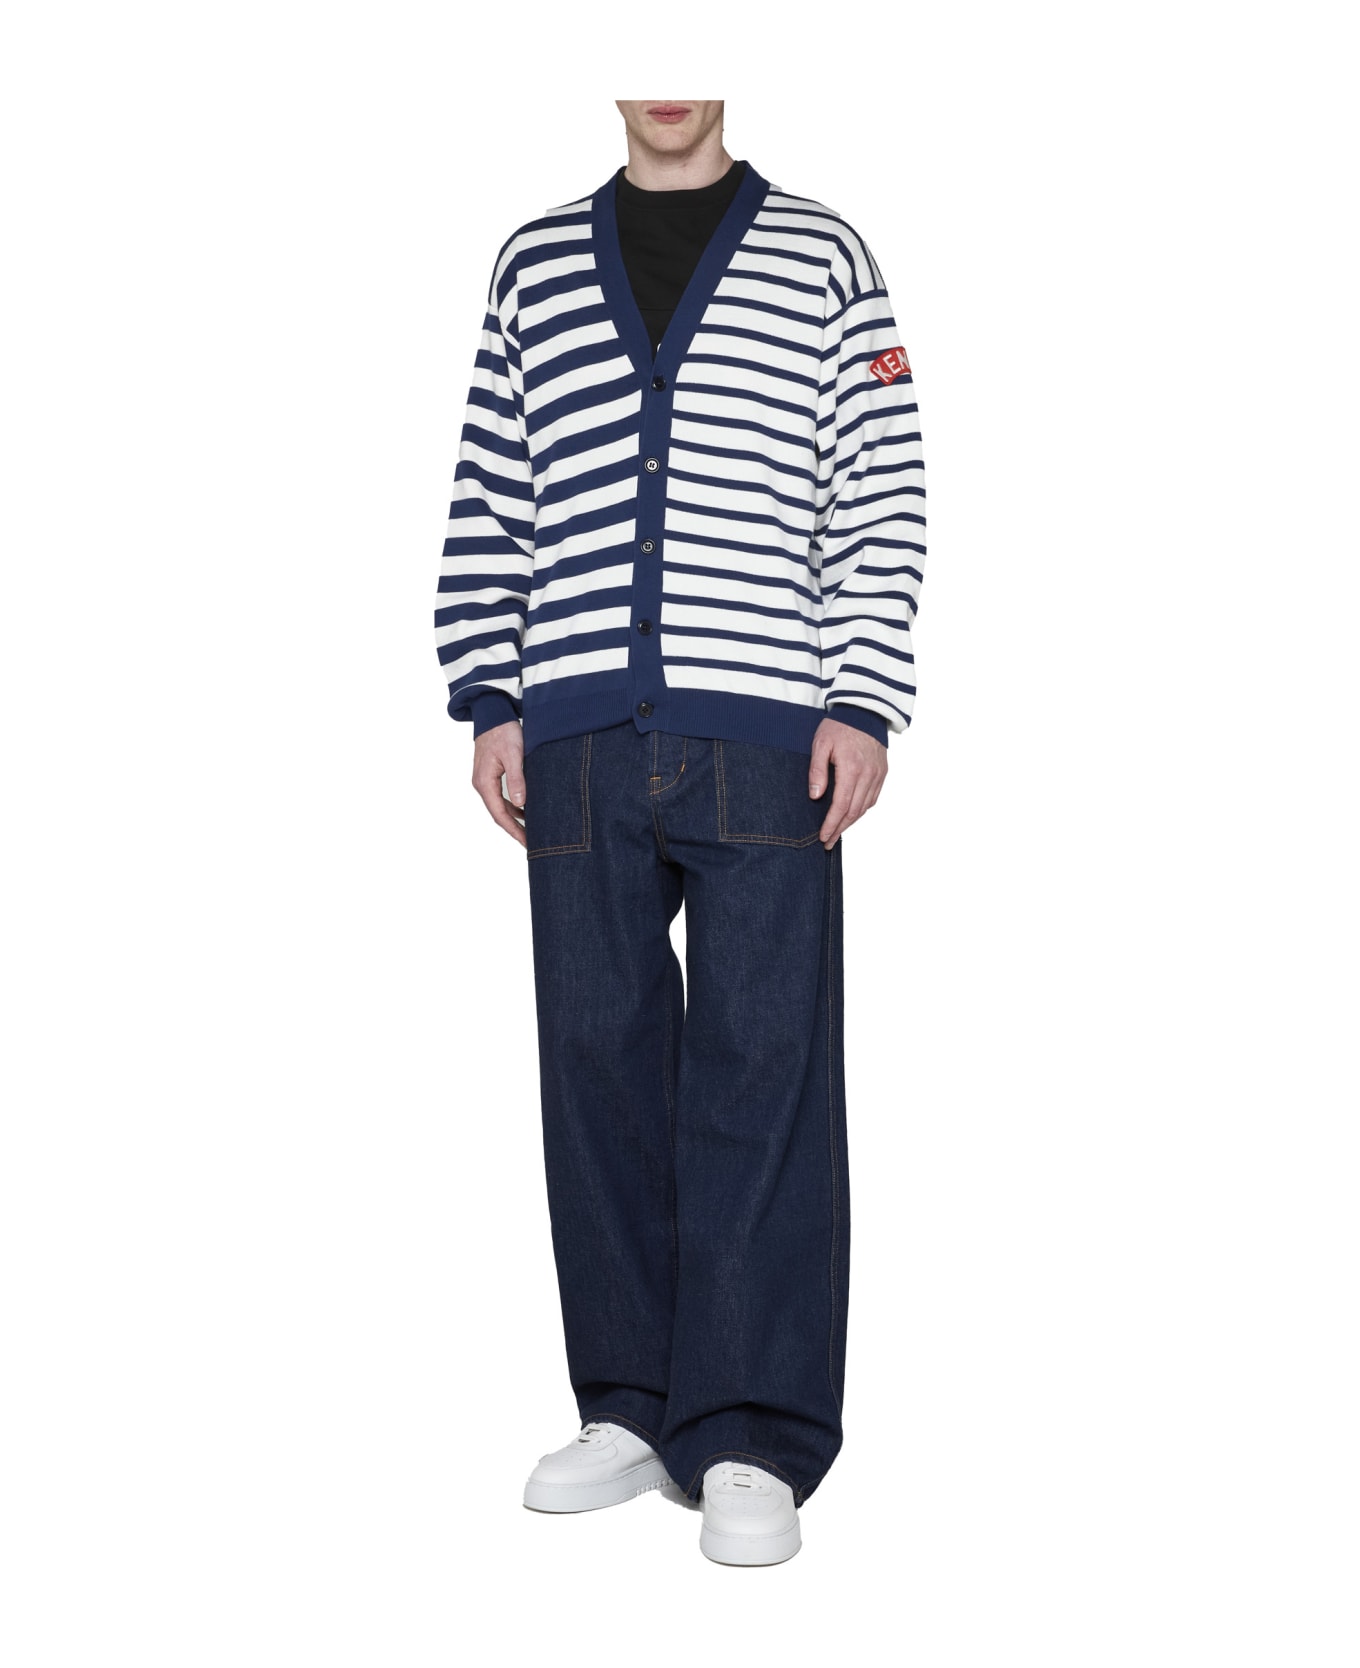 Kenzo Nautical Striped Cardigan - Blue